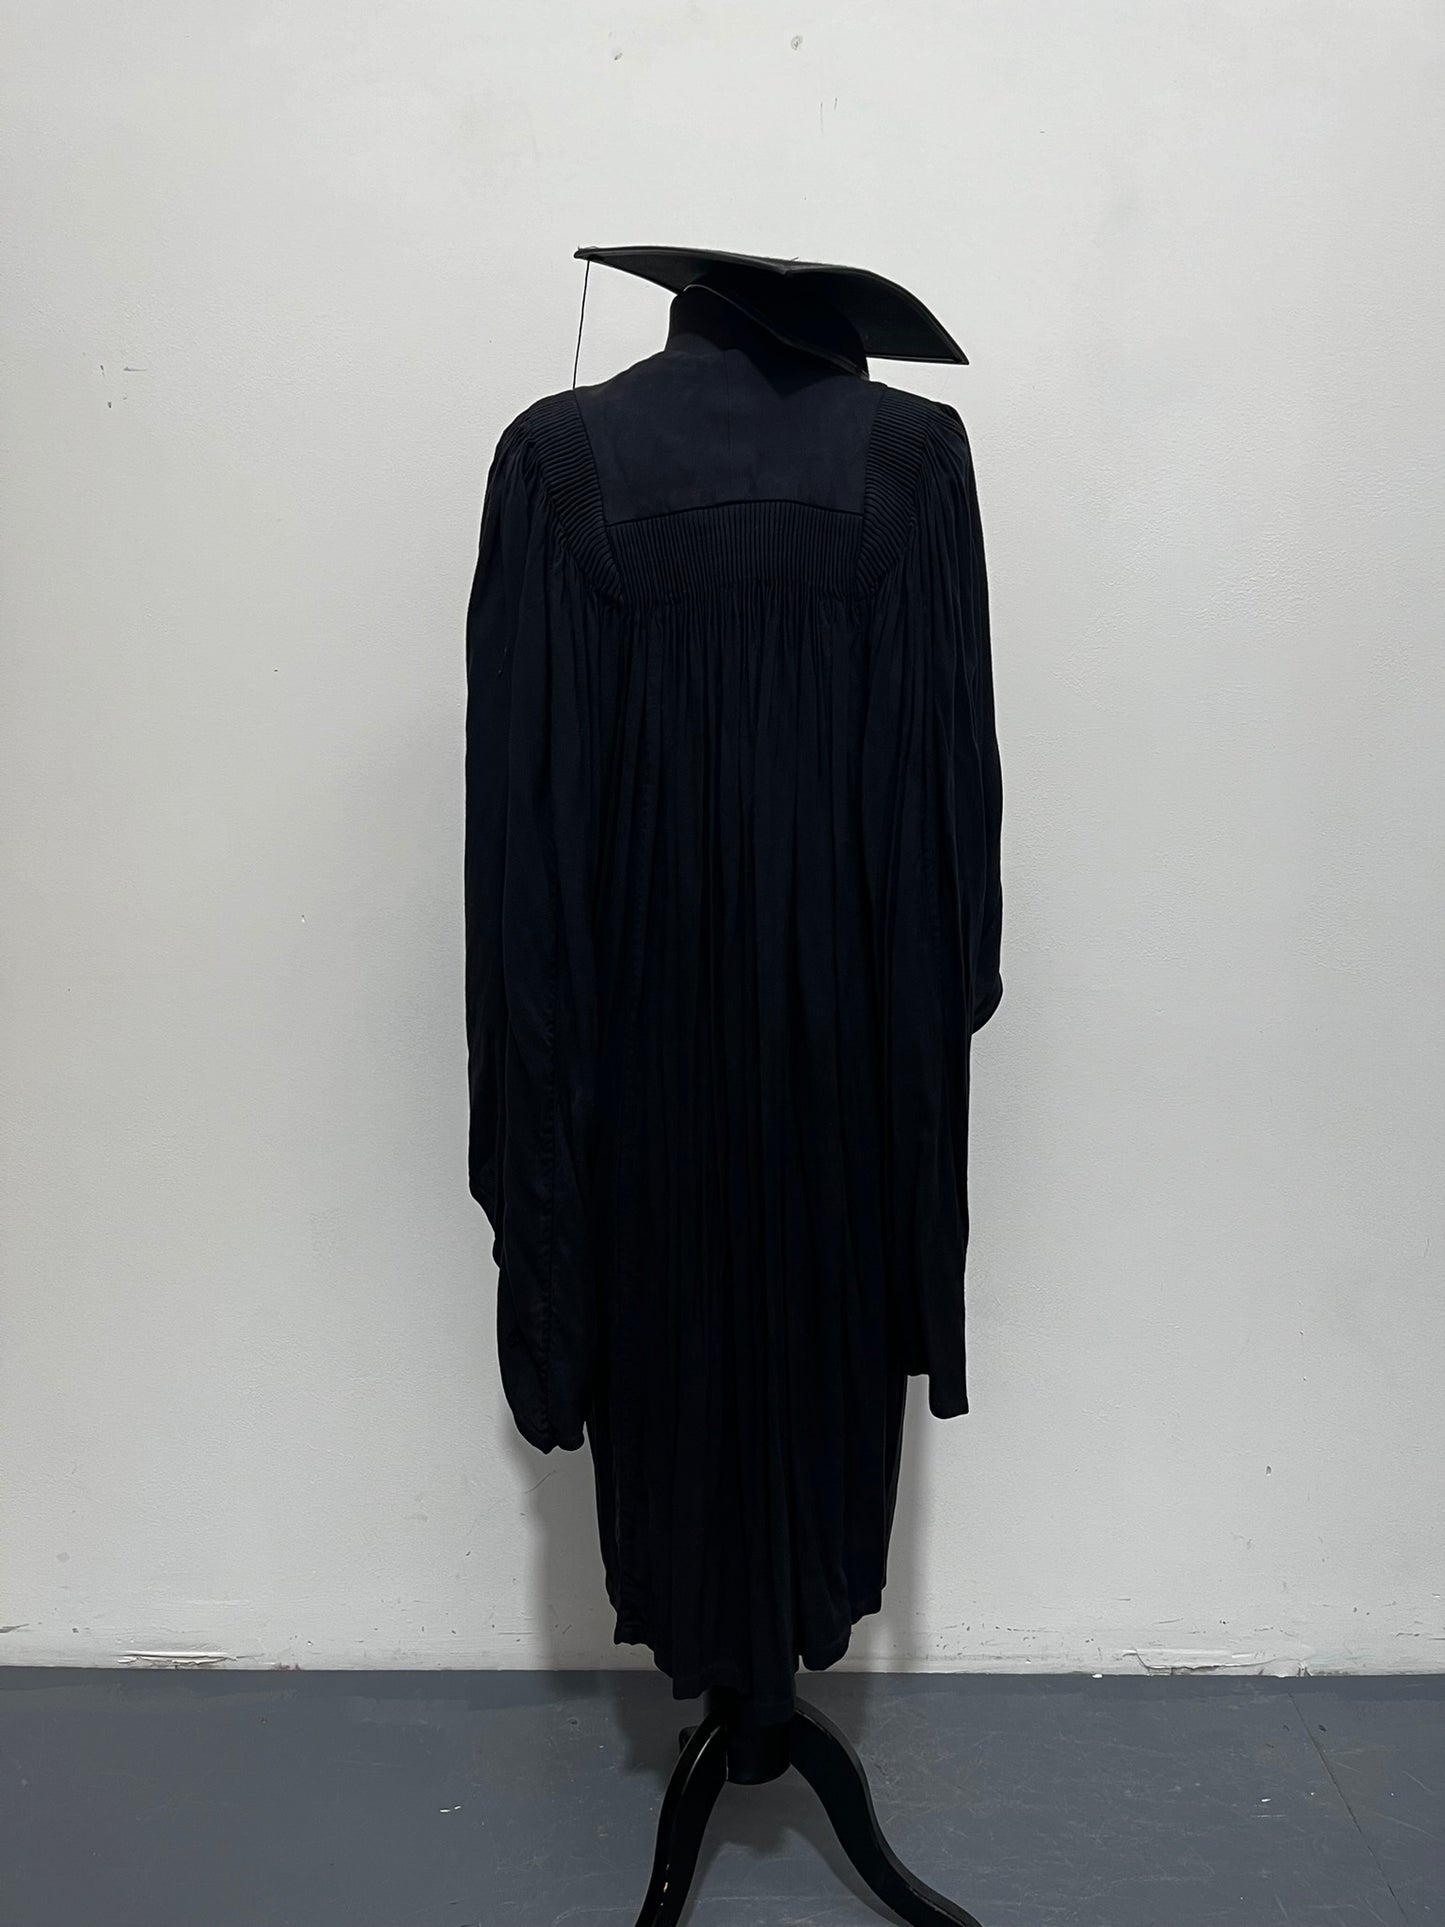 Headmaster teacher black Robe One Size - Ex Hire